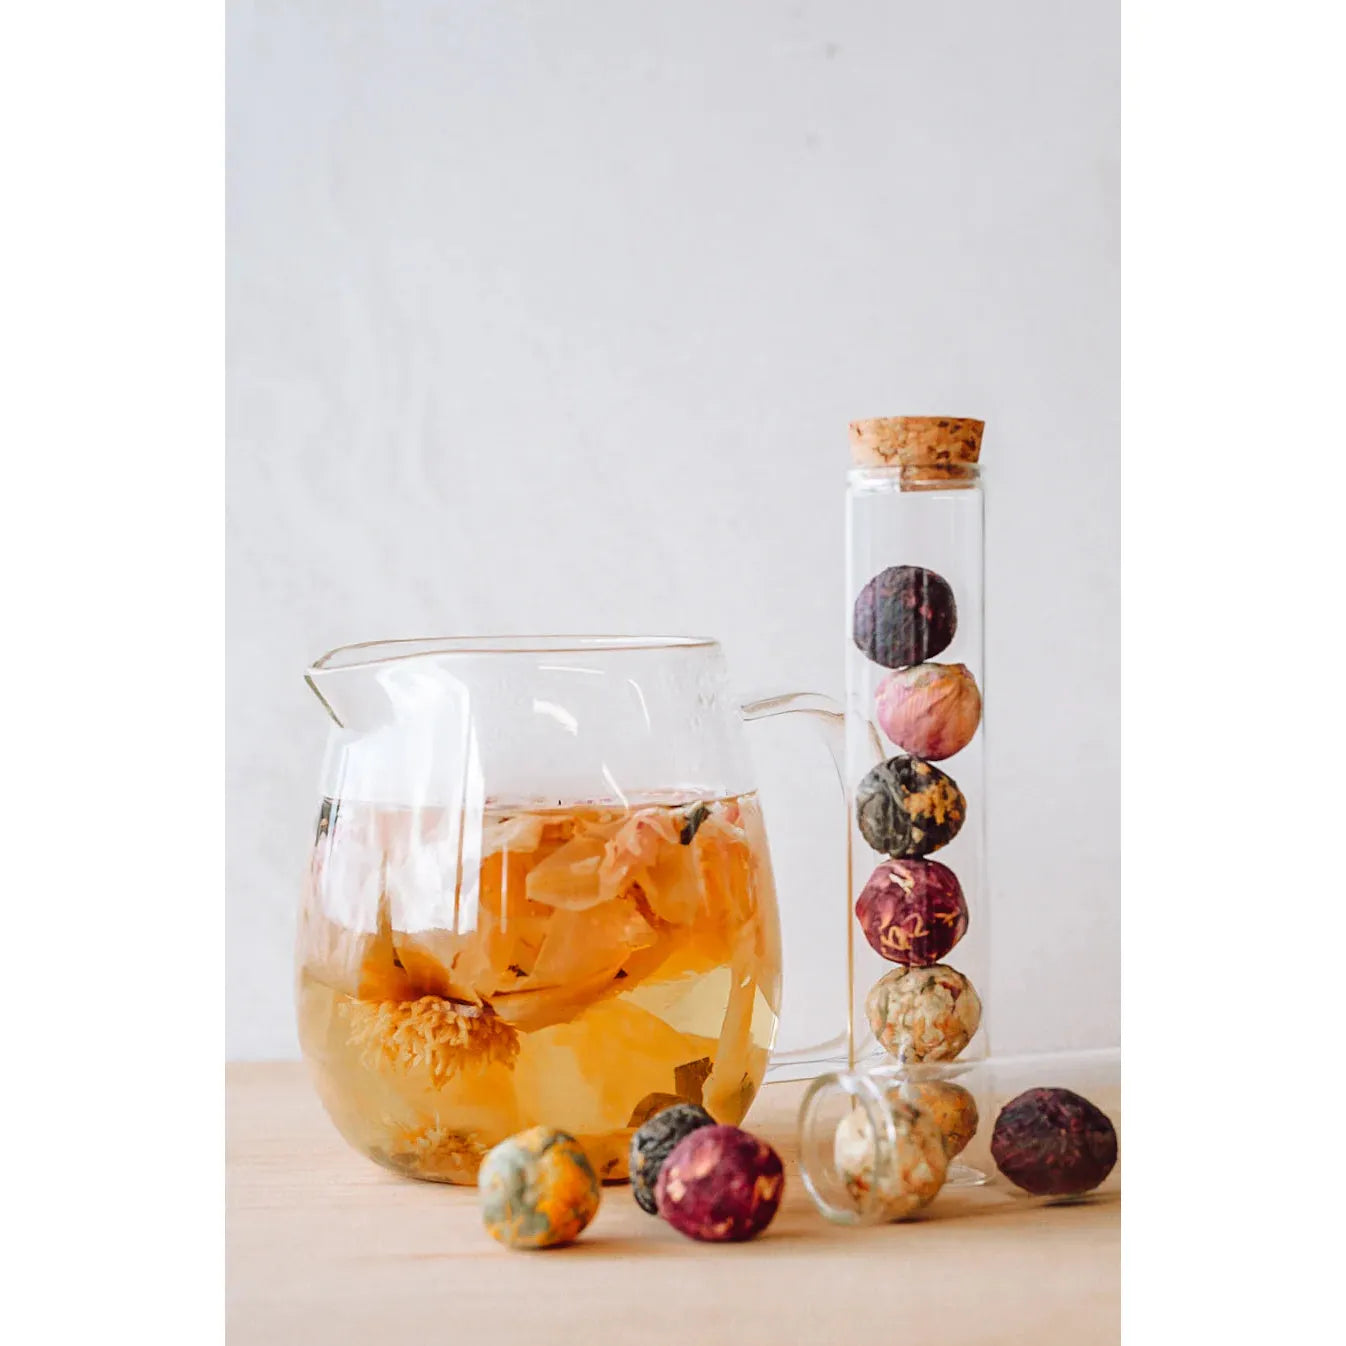 Better Tea Co - Blooming Tea Balls In Glass Tube - Urban Naturals